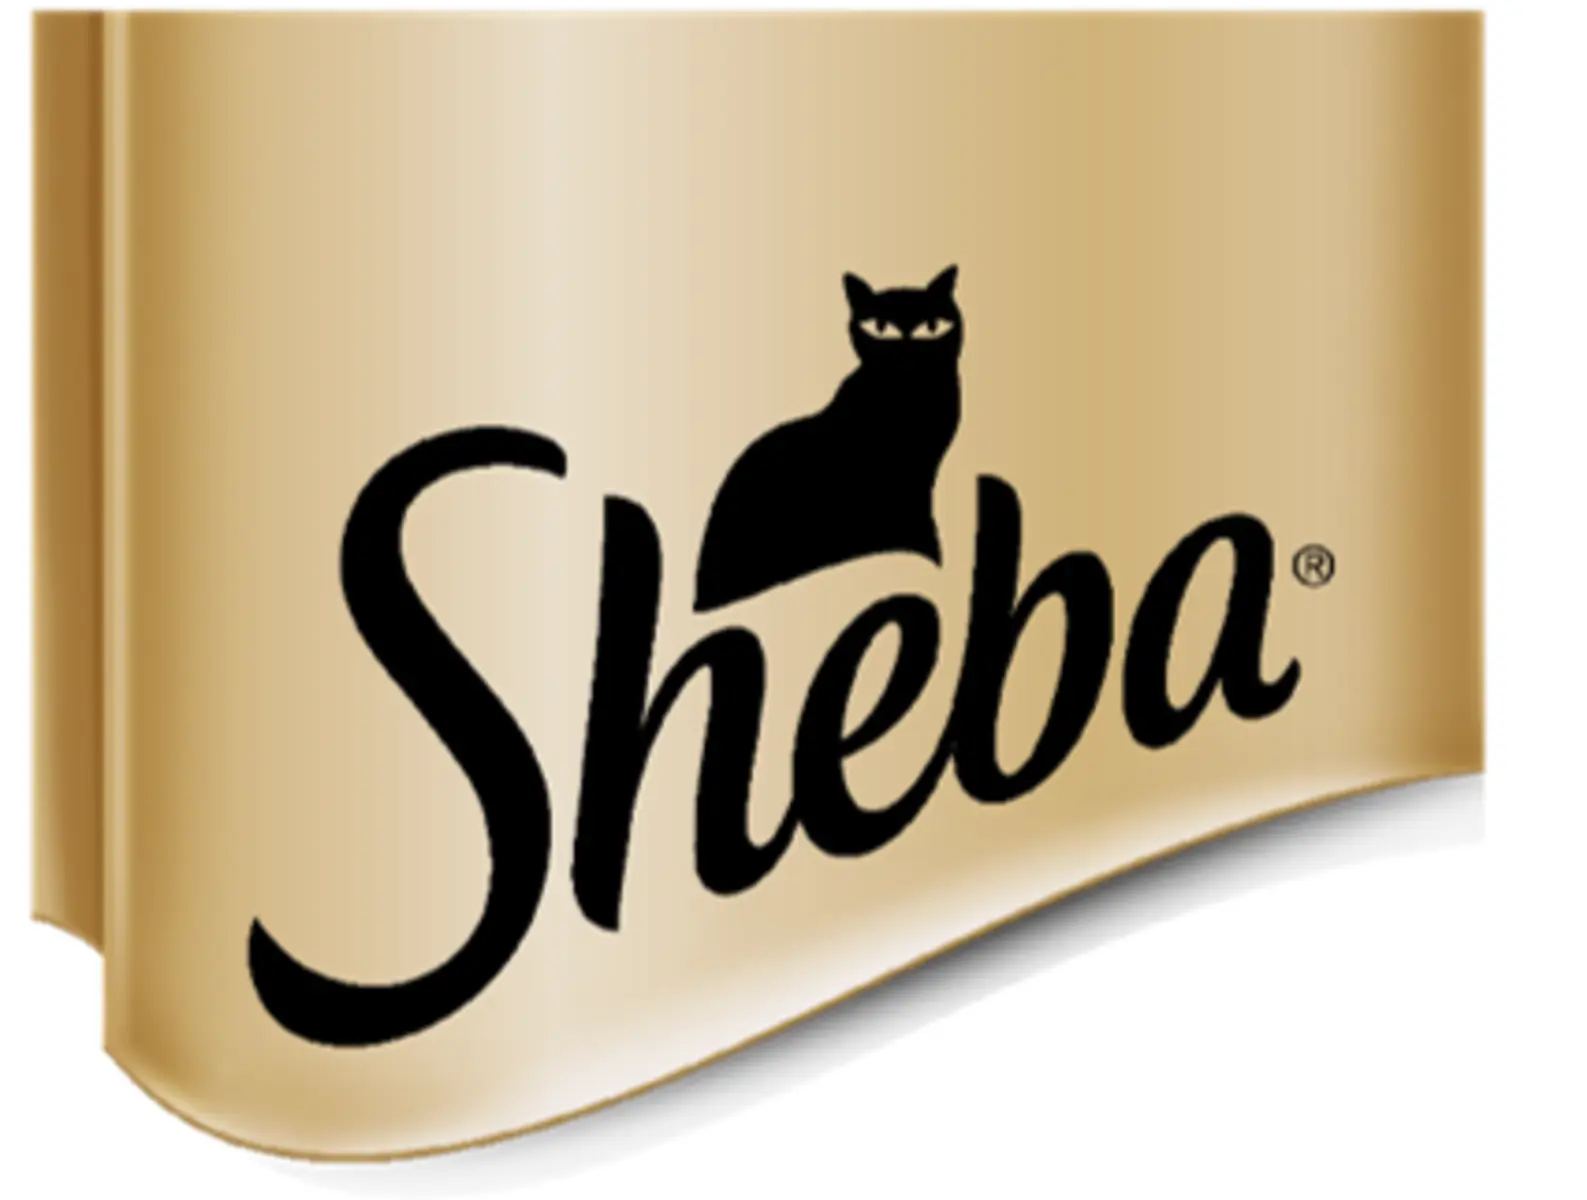 Sheba allergic. Корм для кошек. Sheba. Sheba корм для кошек. Влажный корм для кошек.